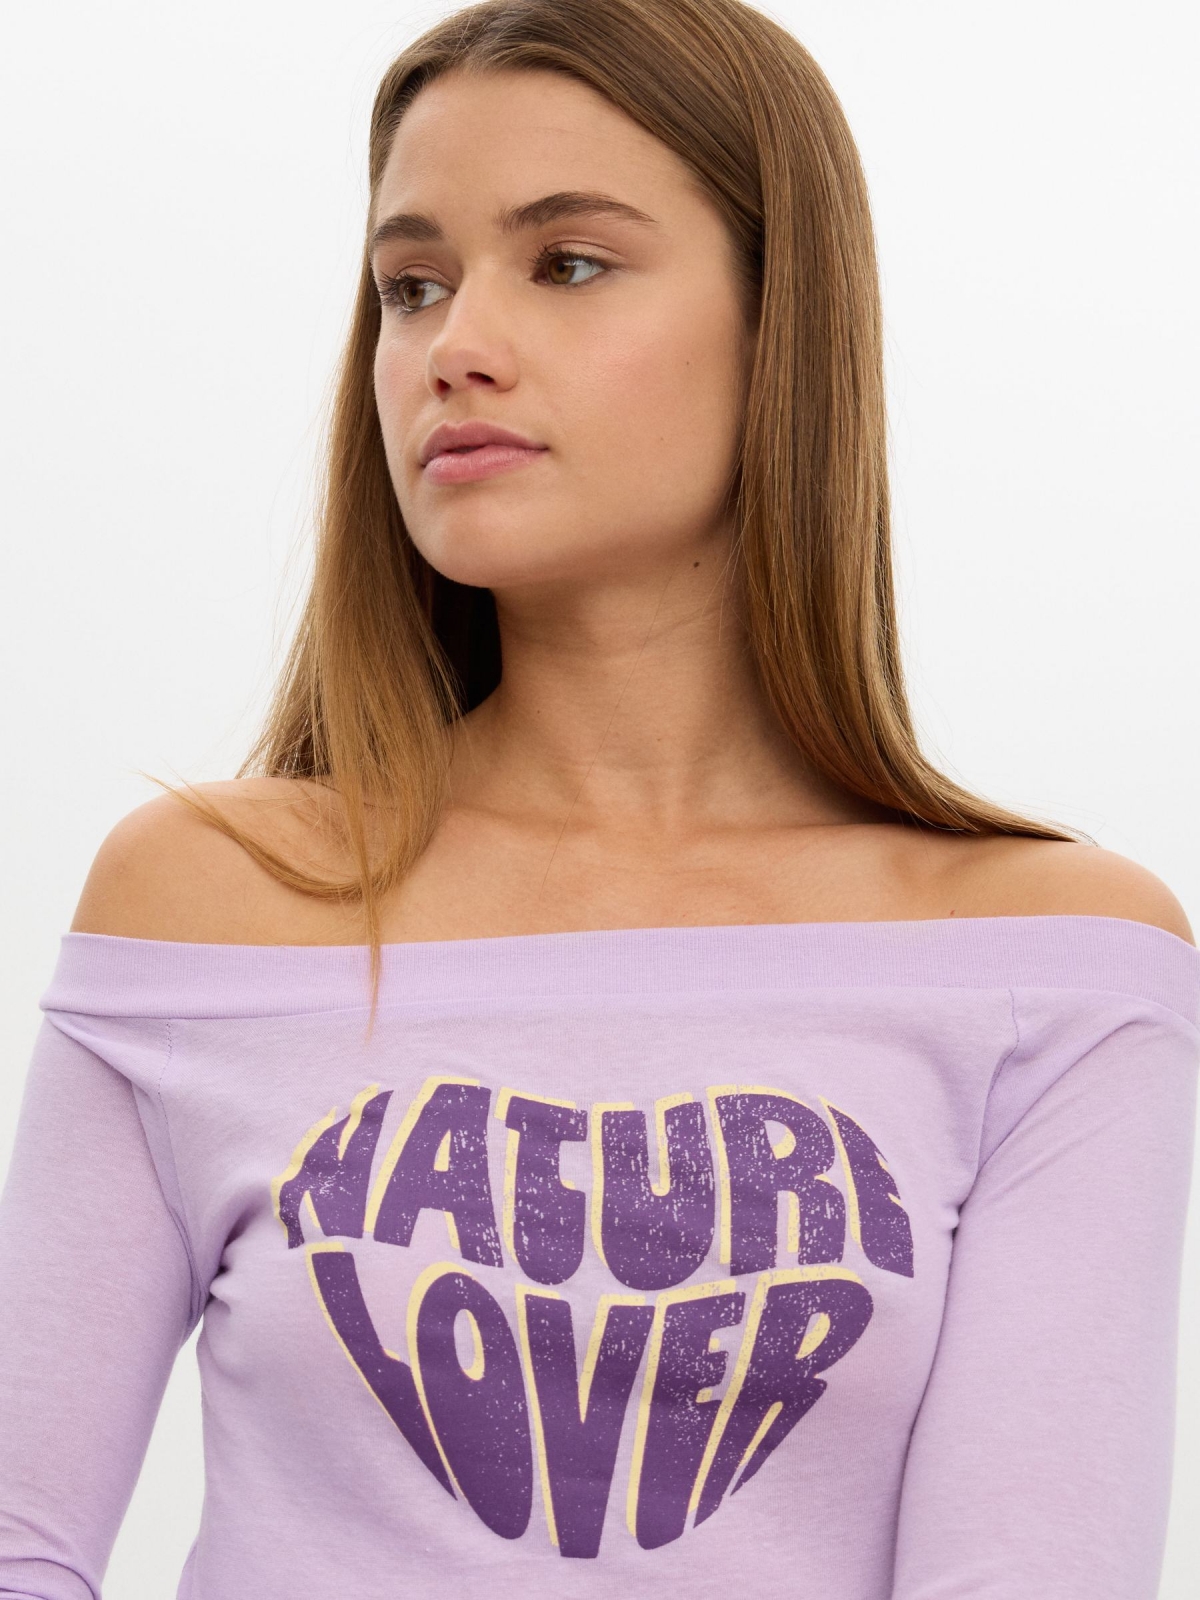 Camiseta Natural Lover lila vista detalle